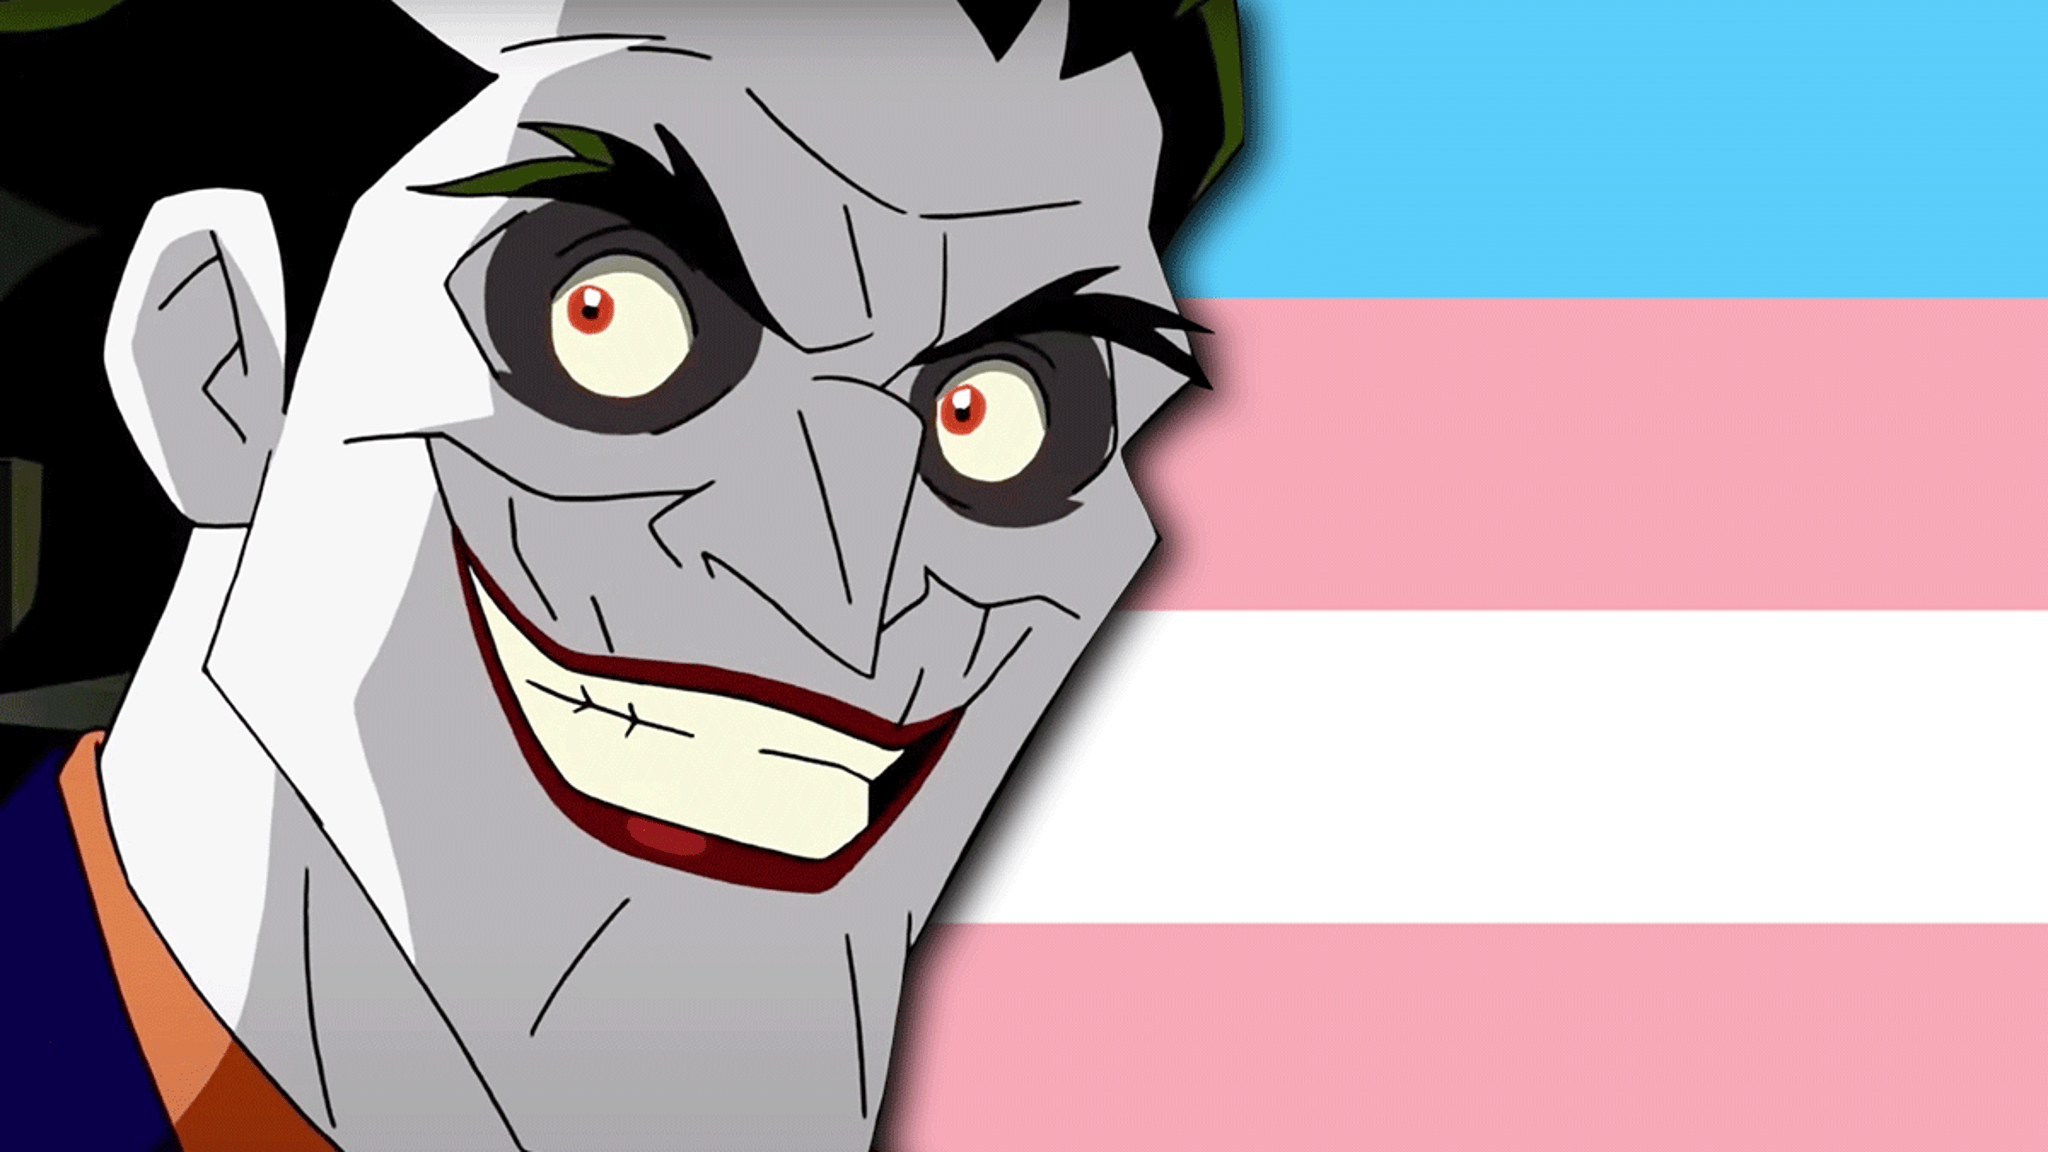 Ein neuer Joker-Comic sieht, wie der Clownprinz schwanger wird, was Empörung auslöst